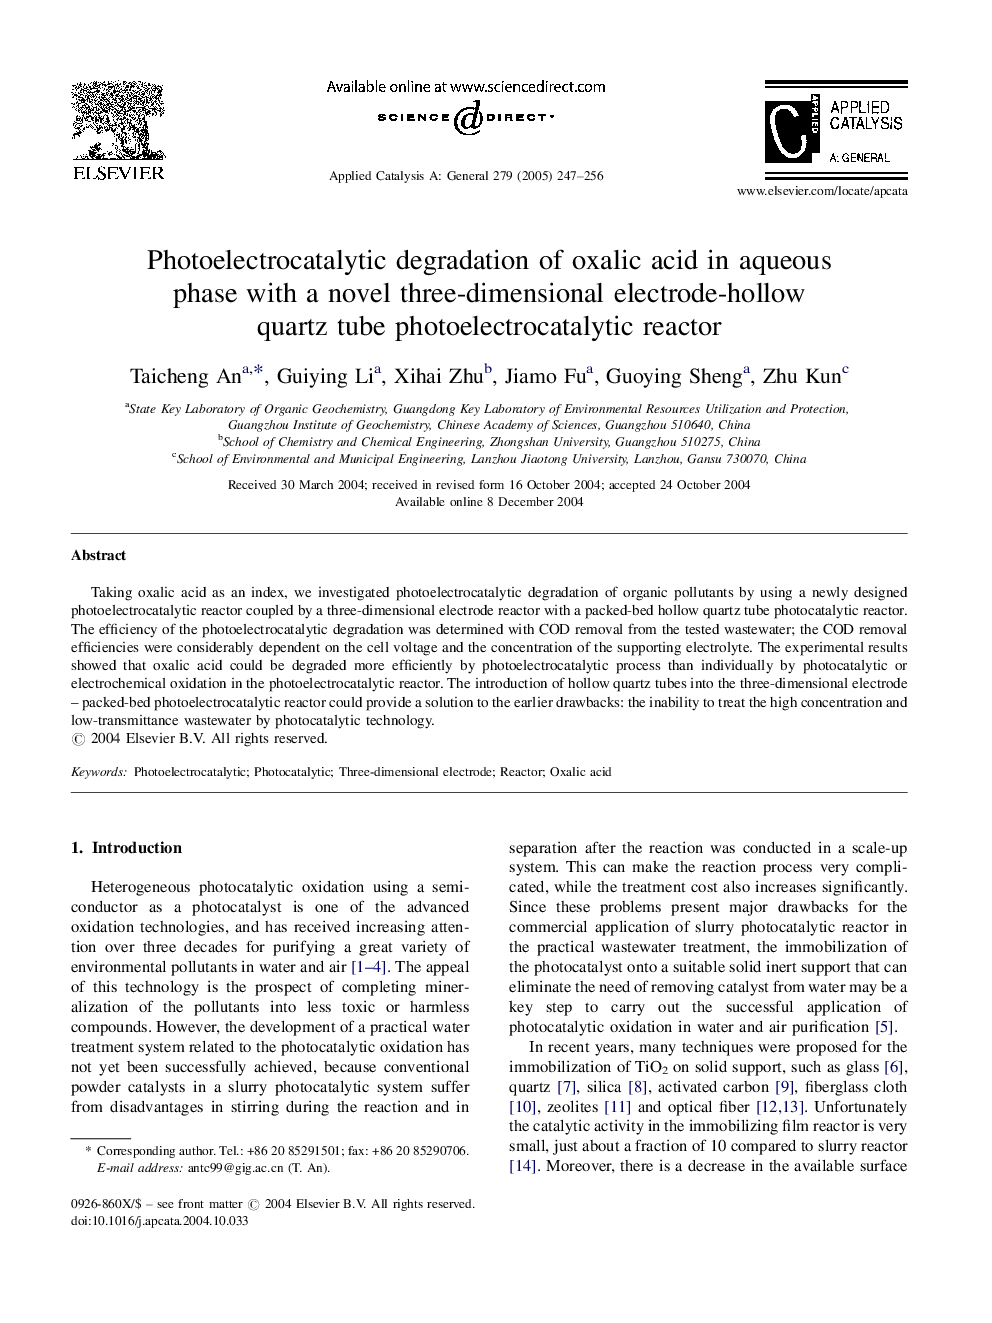 Photoelectrocatalytic degradation of oxalic acid in aqueous phase with a novel three-dimensional electrode-hollow quartz tube photoelectrocatalytic reactor